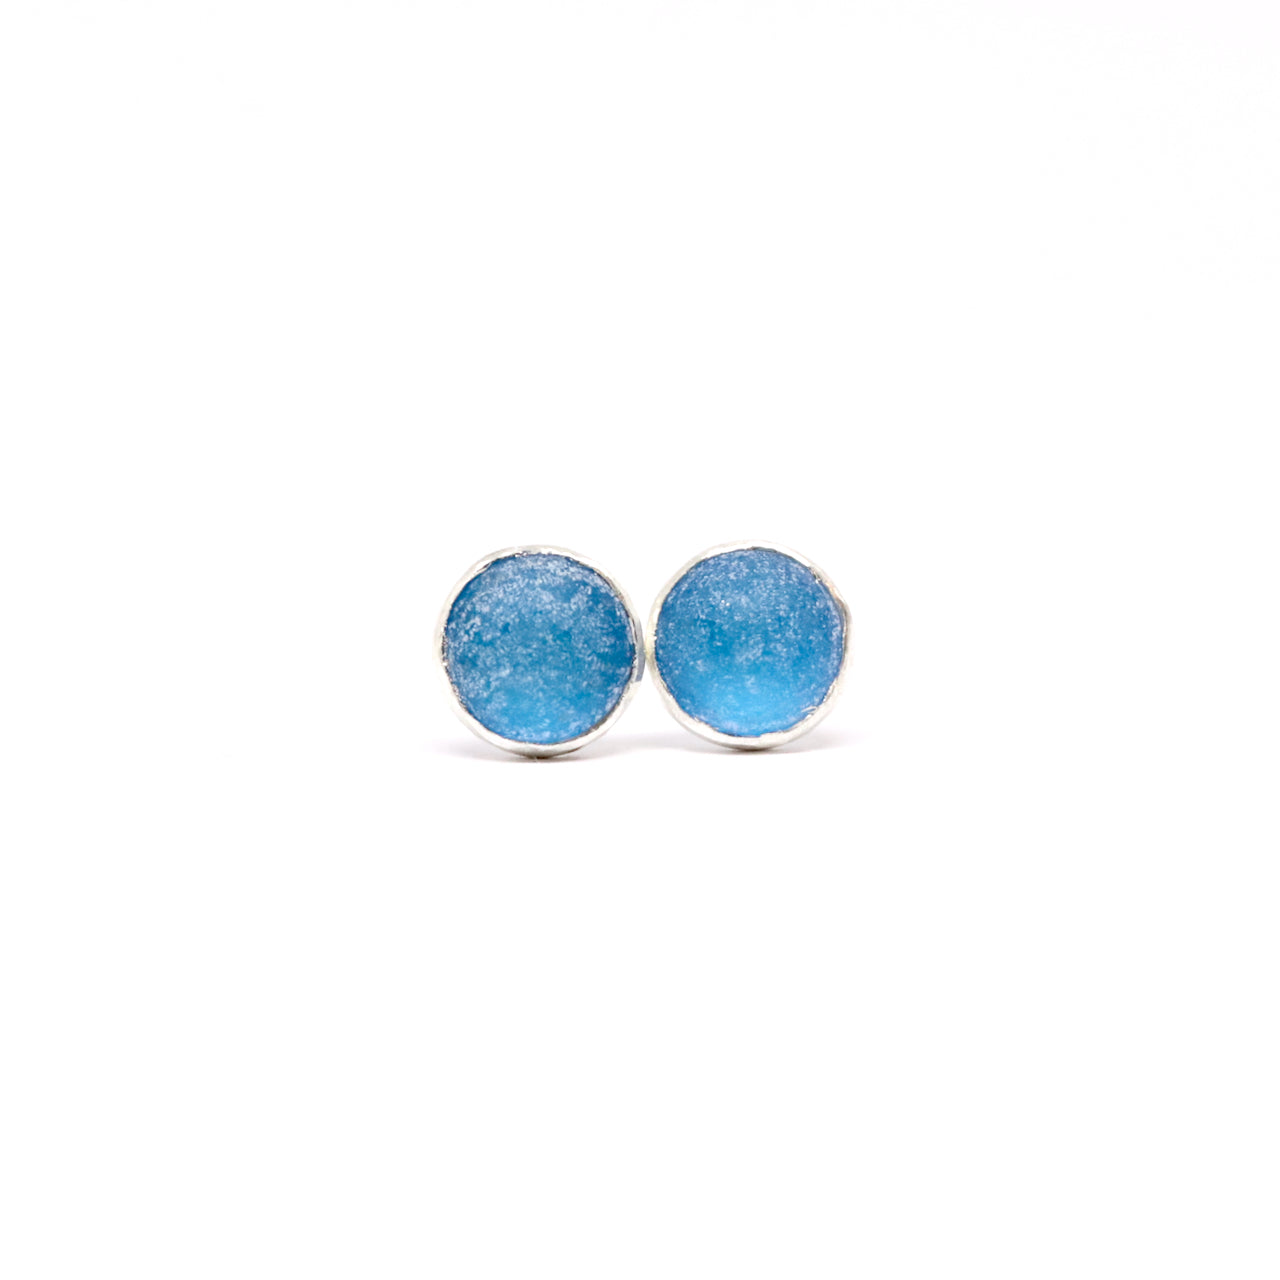 Sky Blue stud earrings. Hand made jewellery by Wānaka artist and jeweller Briar Hardy-Hesson.